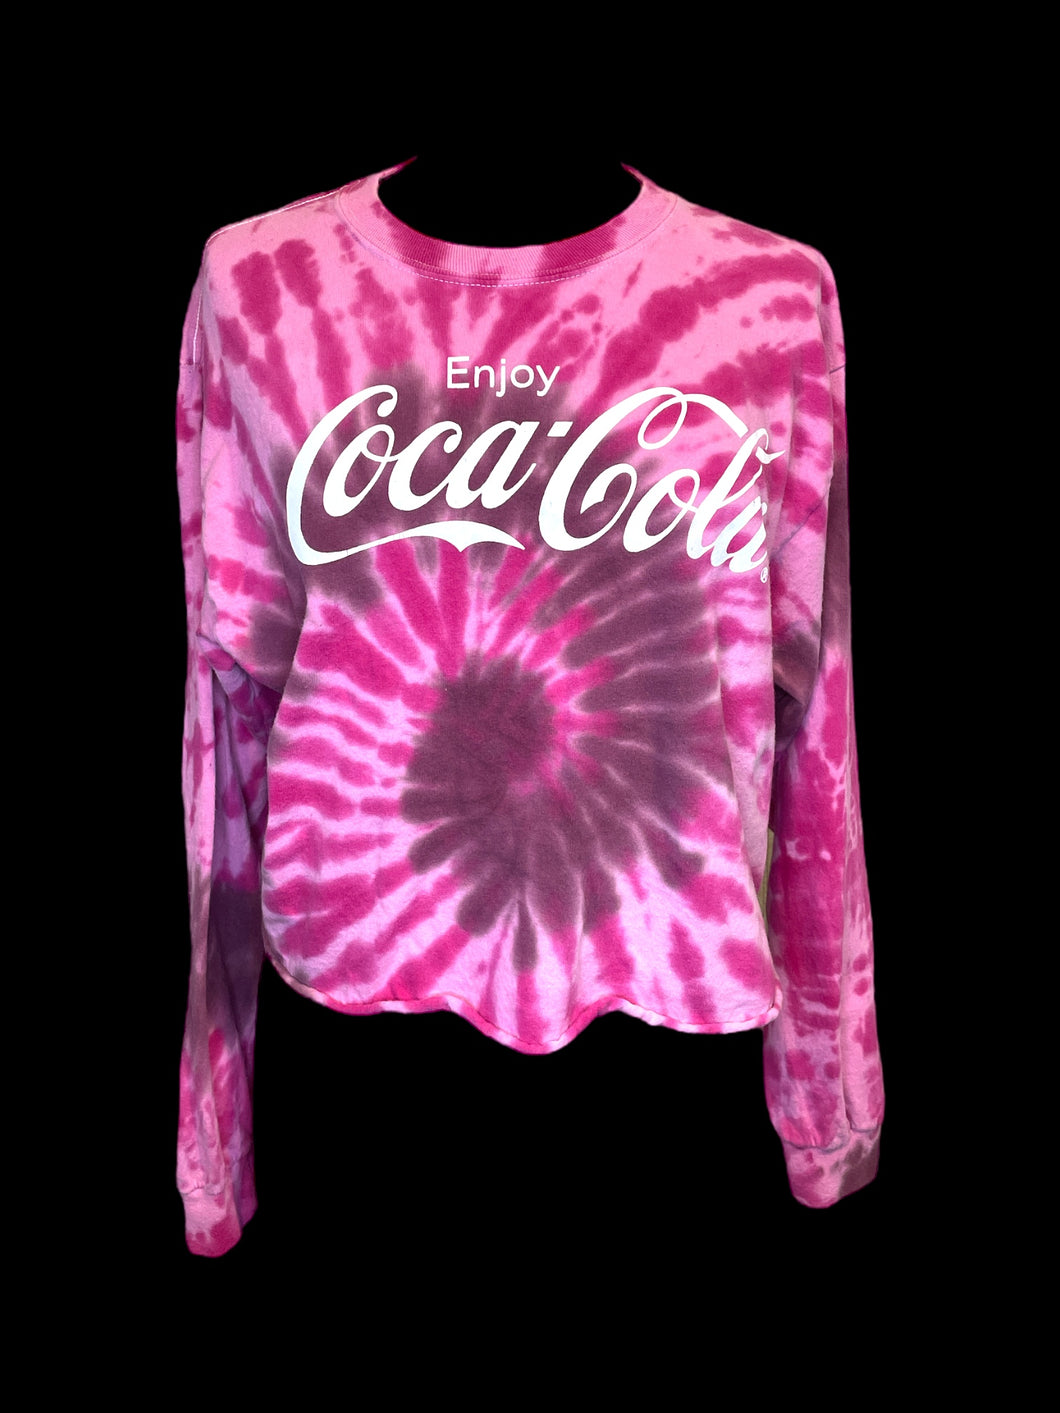 0X Pink, purple, & white tie dye long sleeve crew neck cotton crop top w/ white Coca-Cola logo graphic